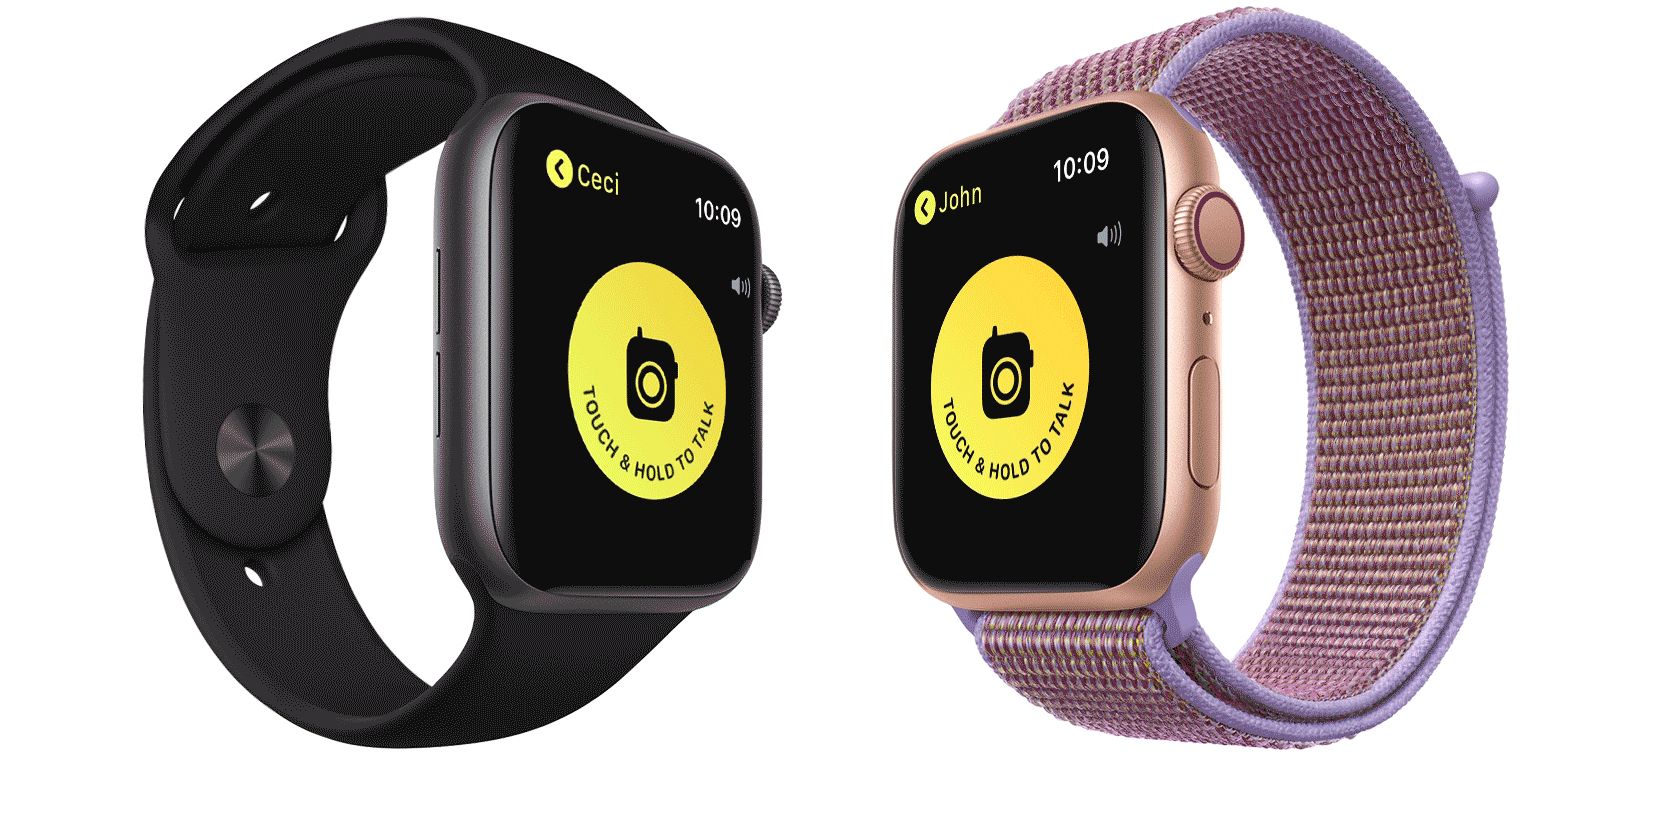 apple watch walkie talkie - Come utilizzare il walkie-talkie su Apple Watch